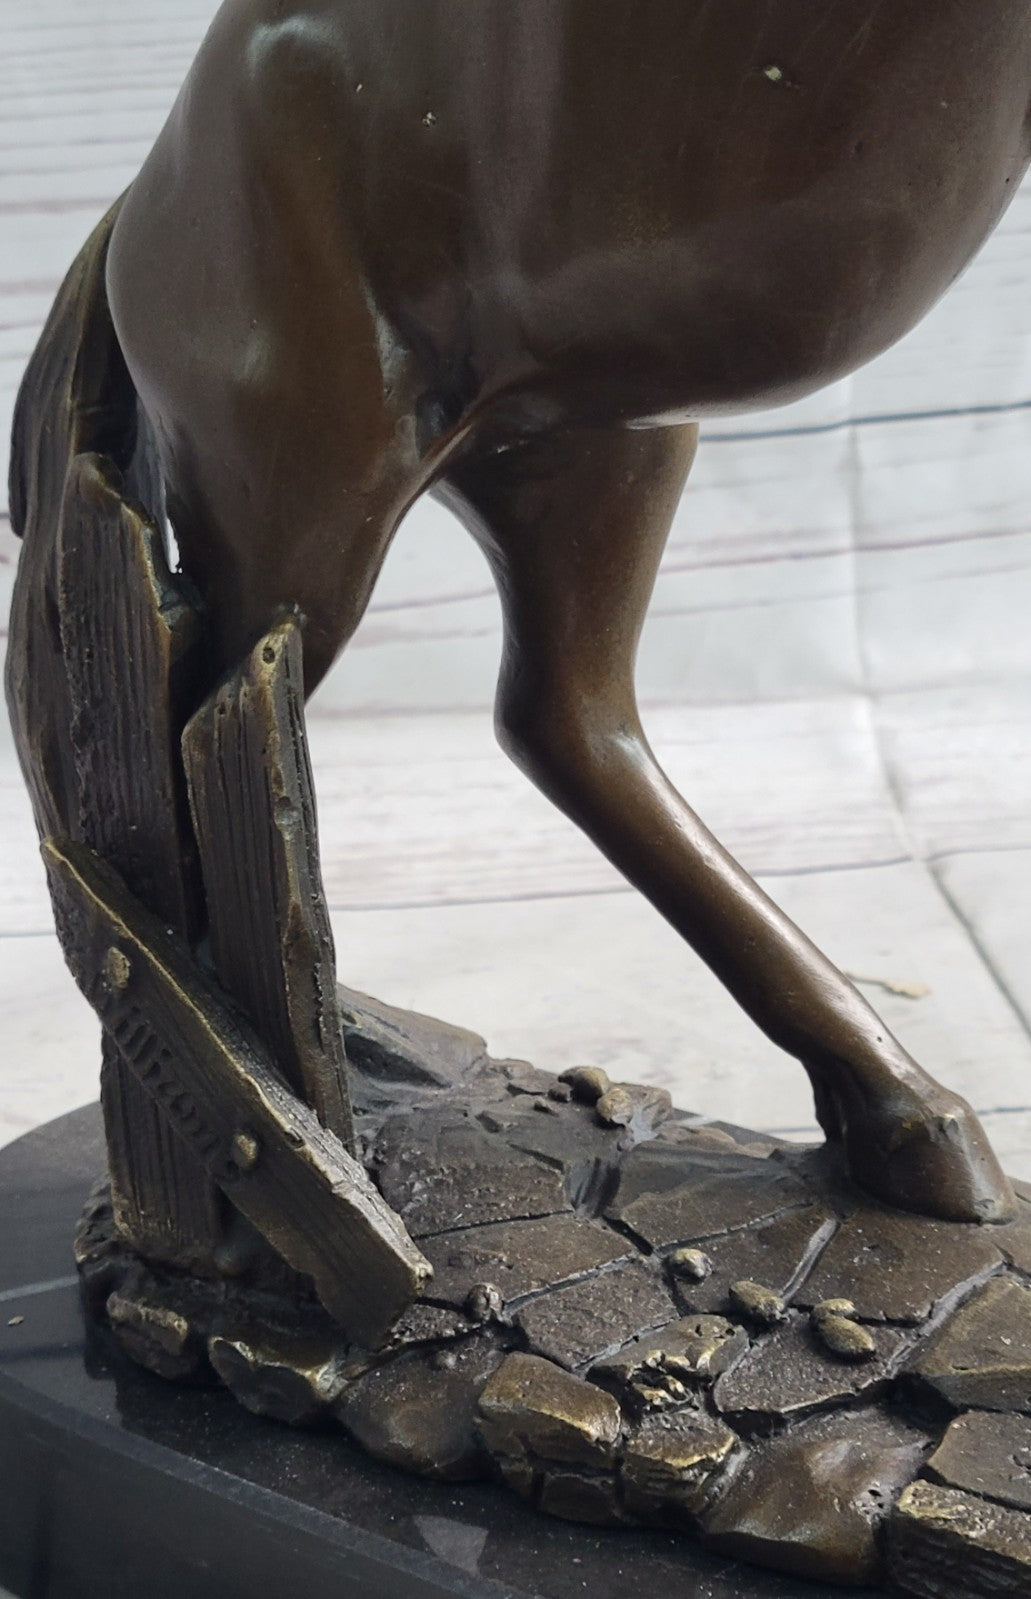 Striking Rearing Horse Bronze Sculpture Figurine Arabian Stallion Decor